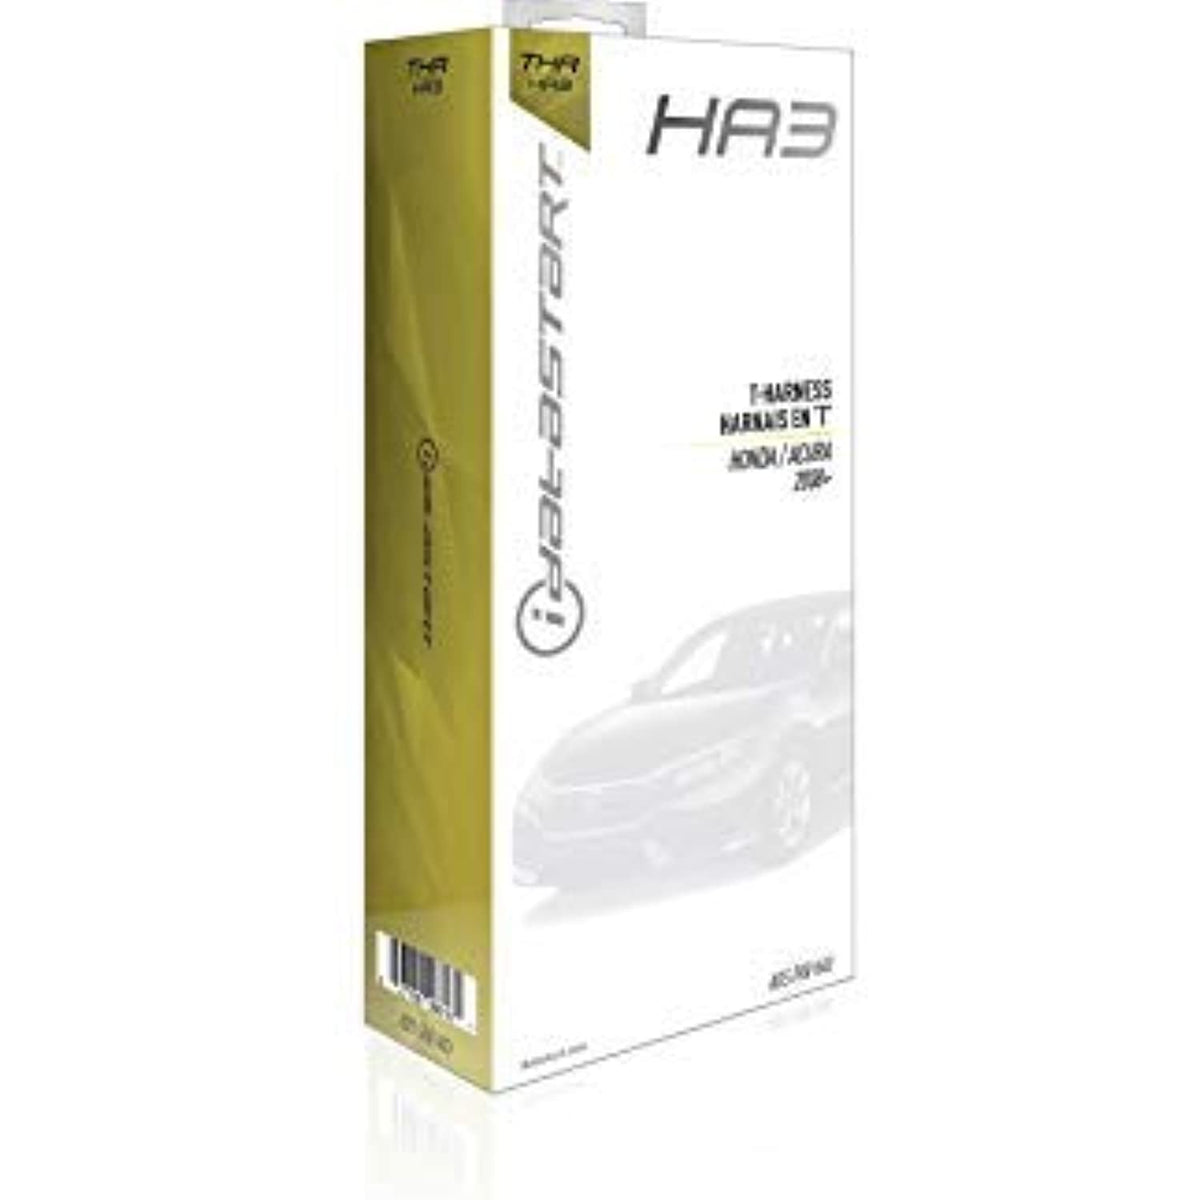 iDatalink ADS-THR-HA3 Factory Fit Installation T-Harness for 2008+ Honda & Acura